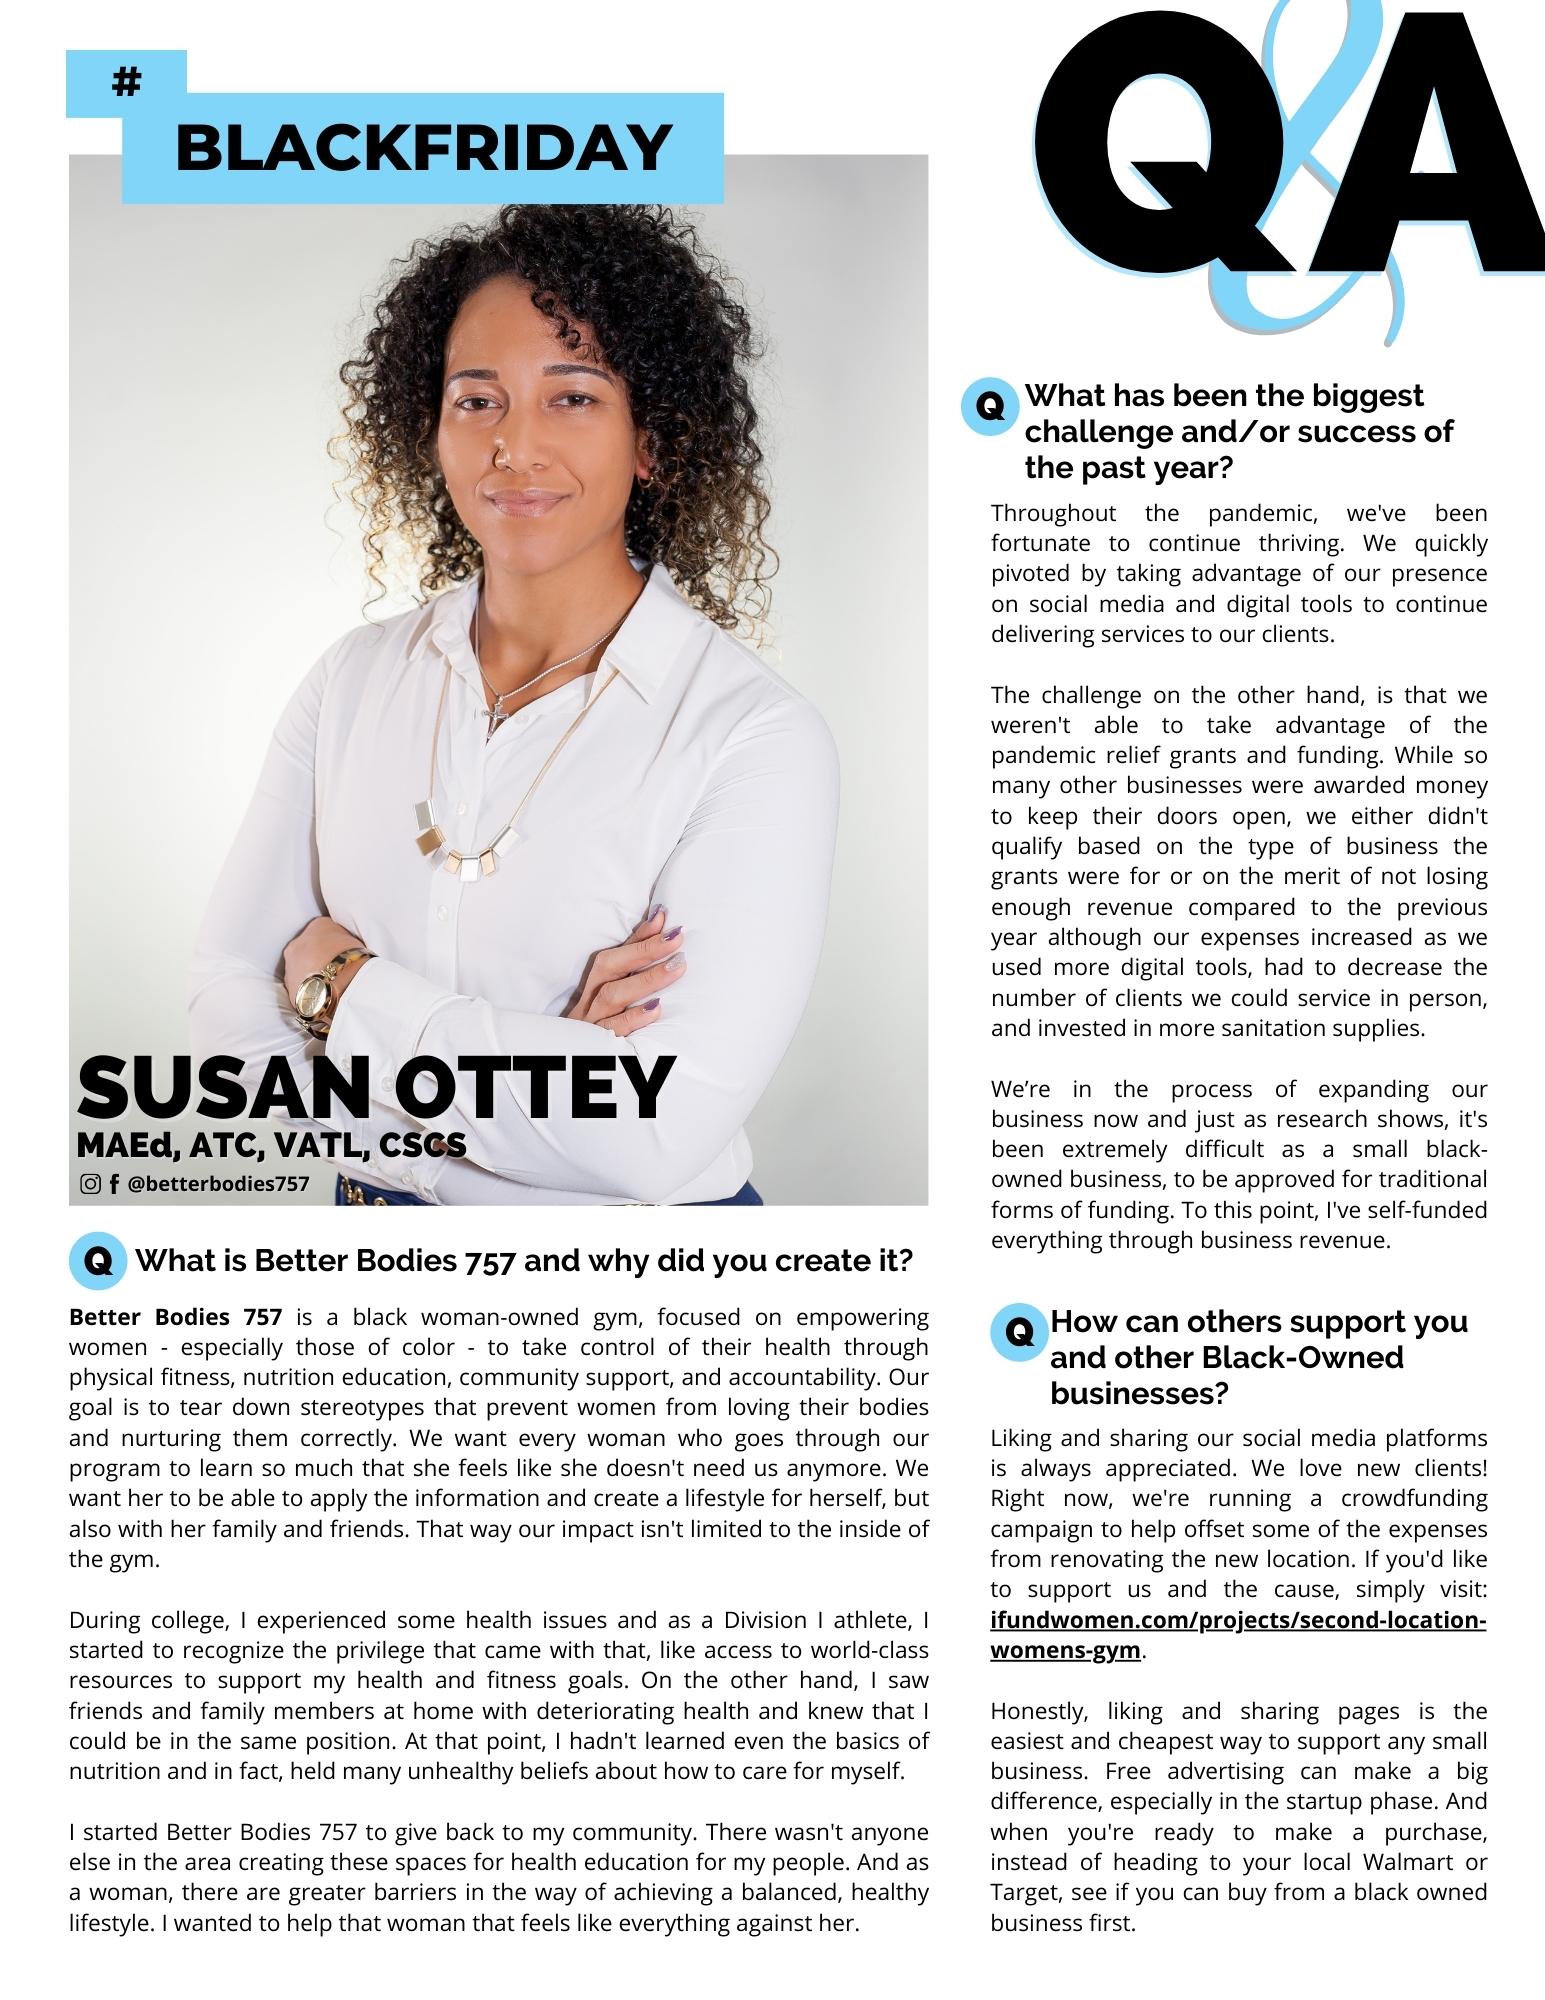 Interview with Susan Ottey